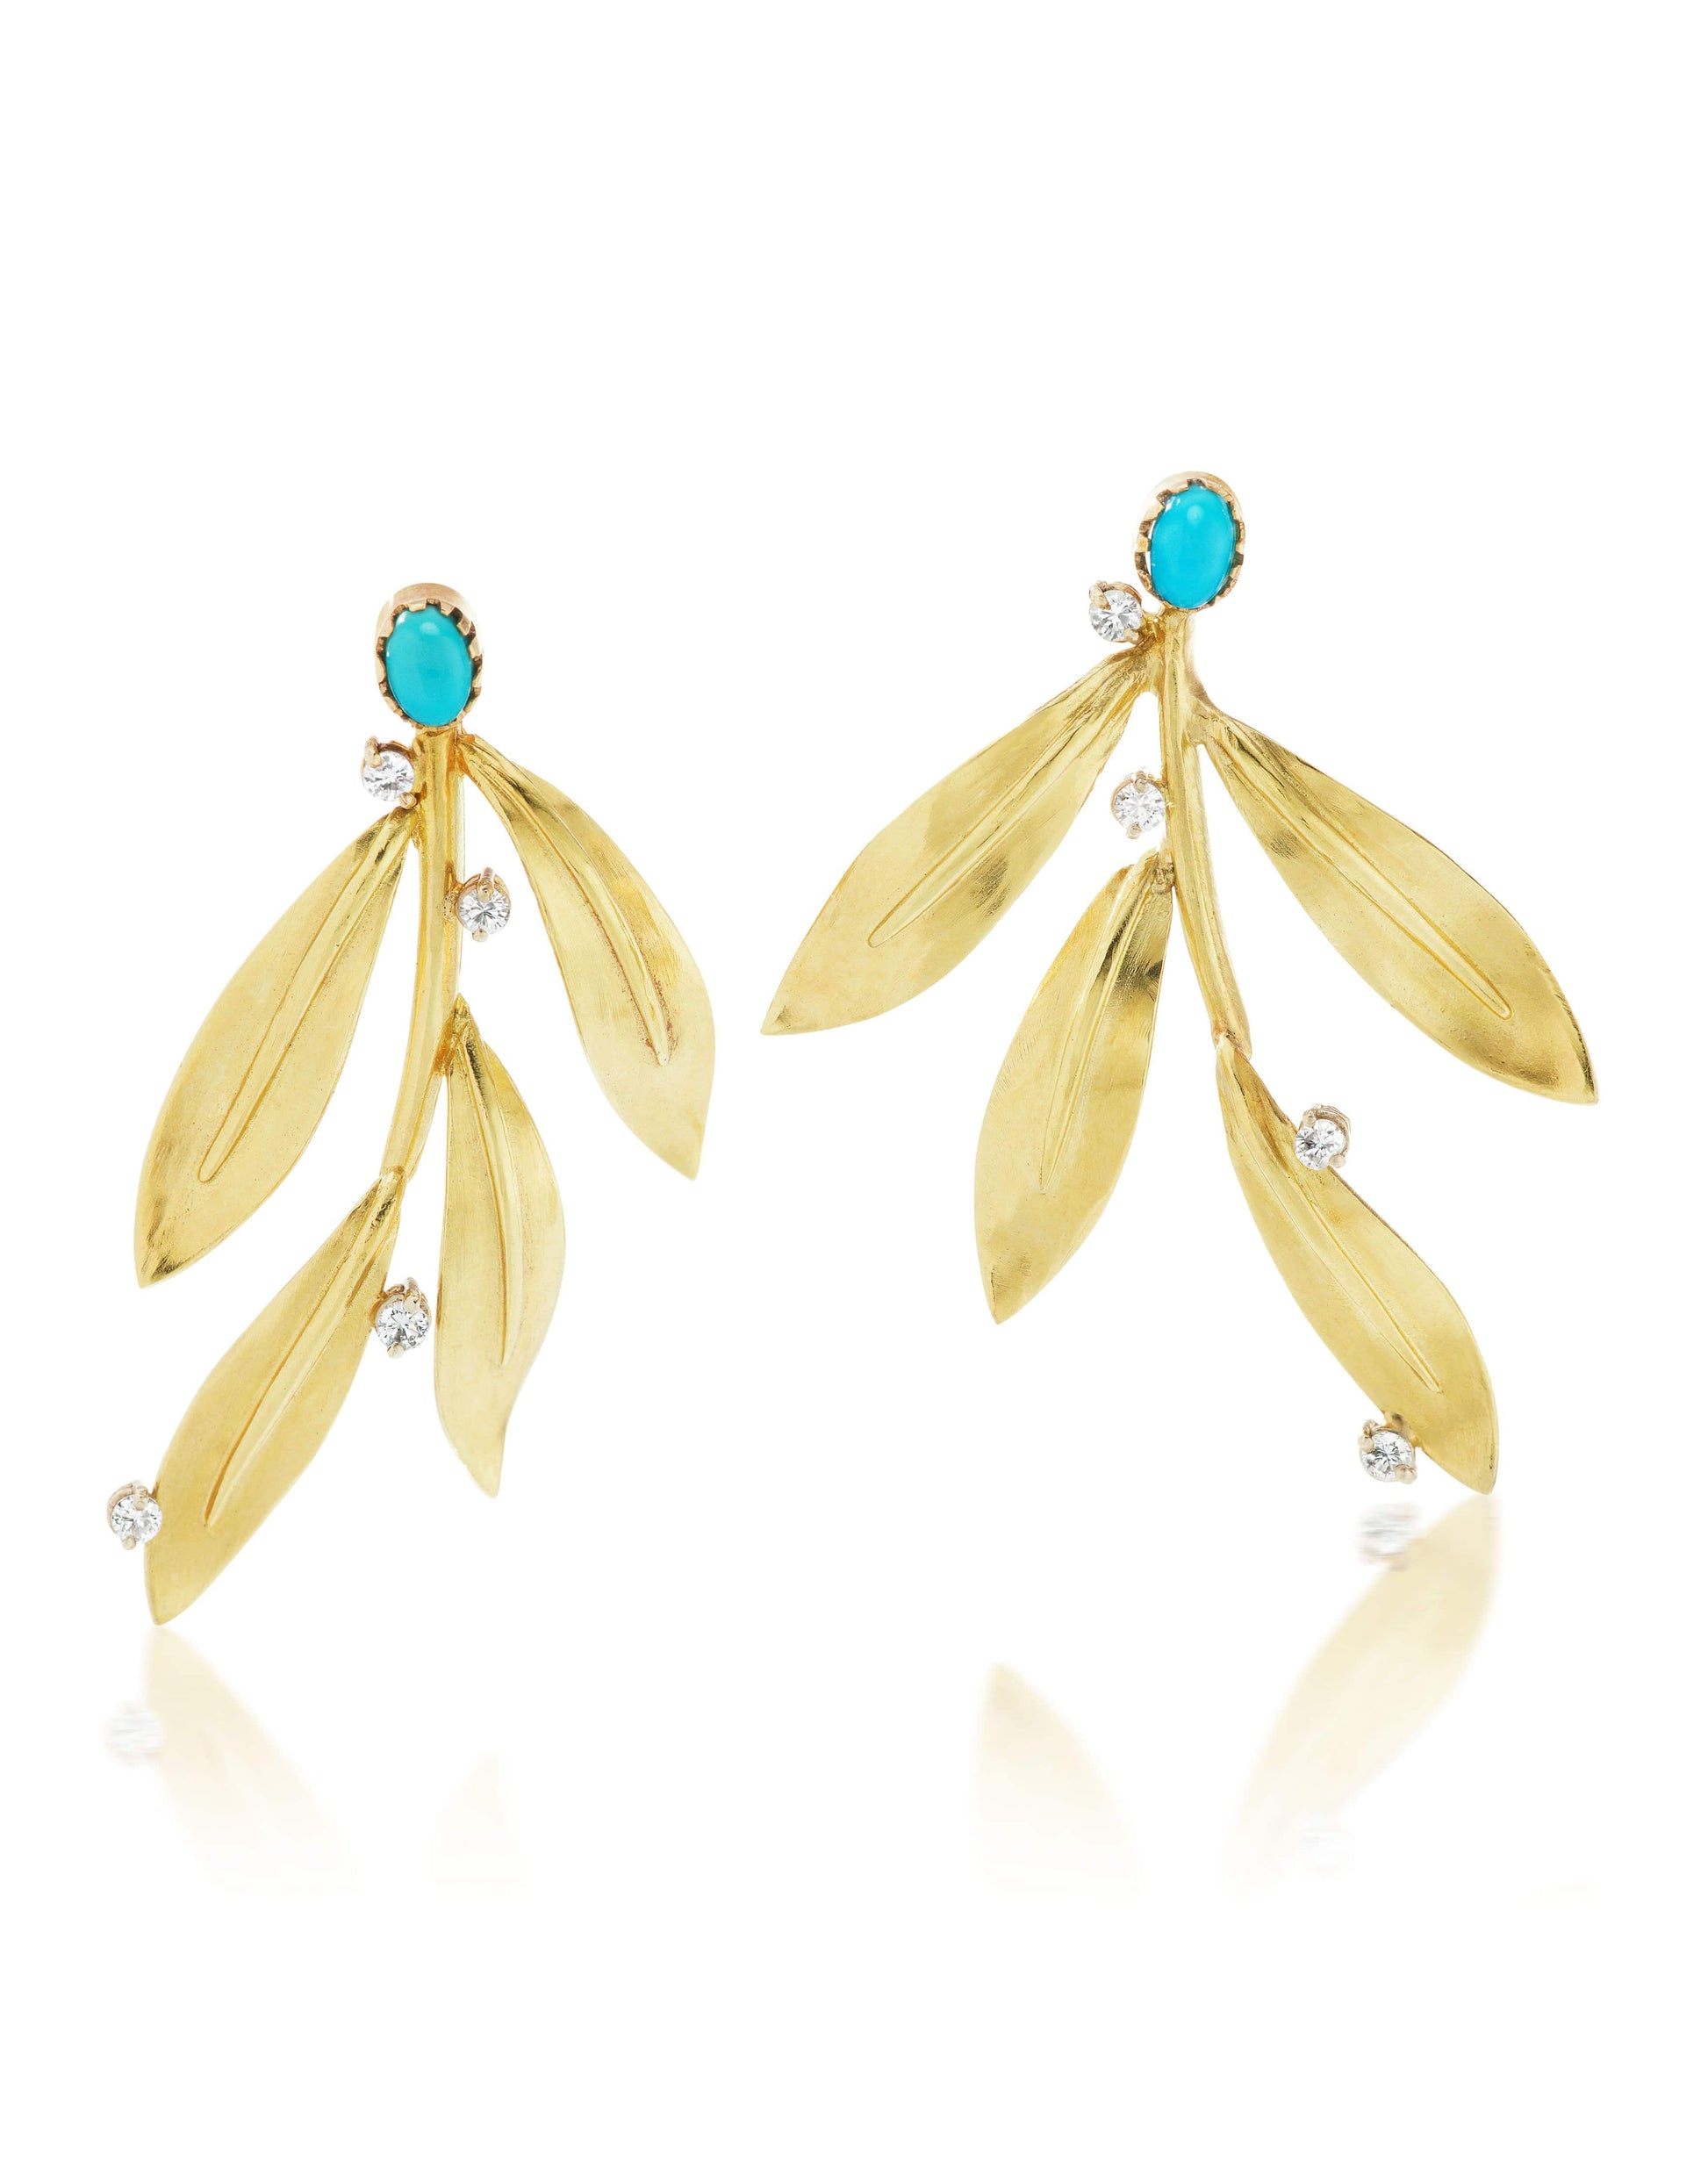 JENNA BLAKE-Turquoise Leaf Earrings-YELLOW GOLD